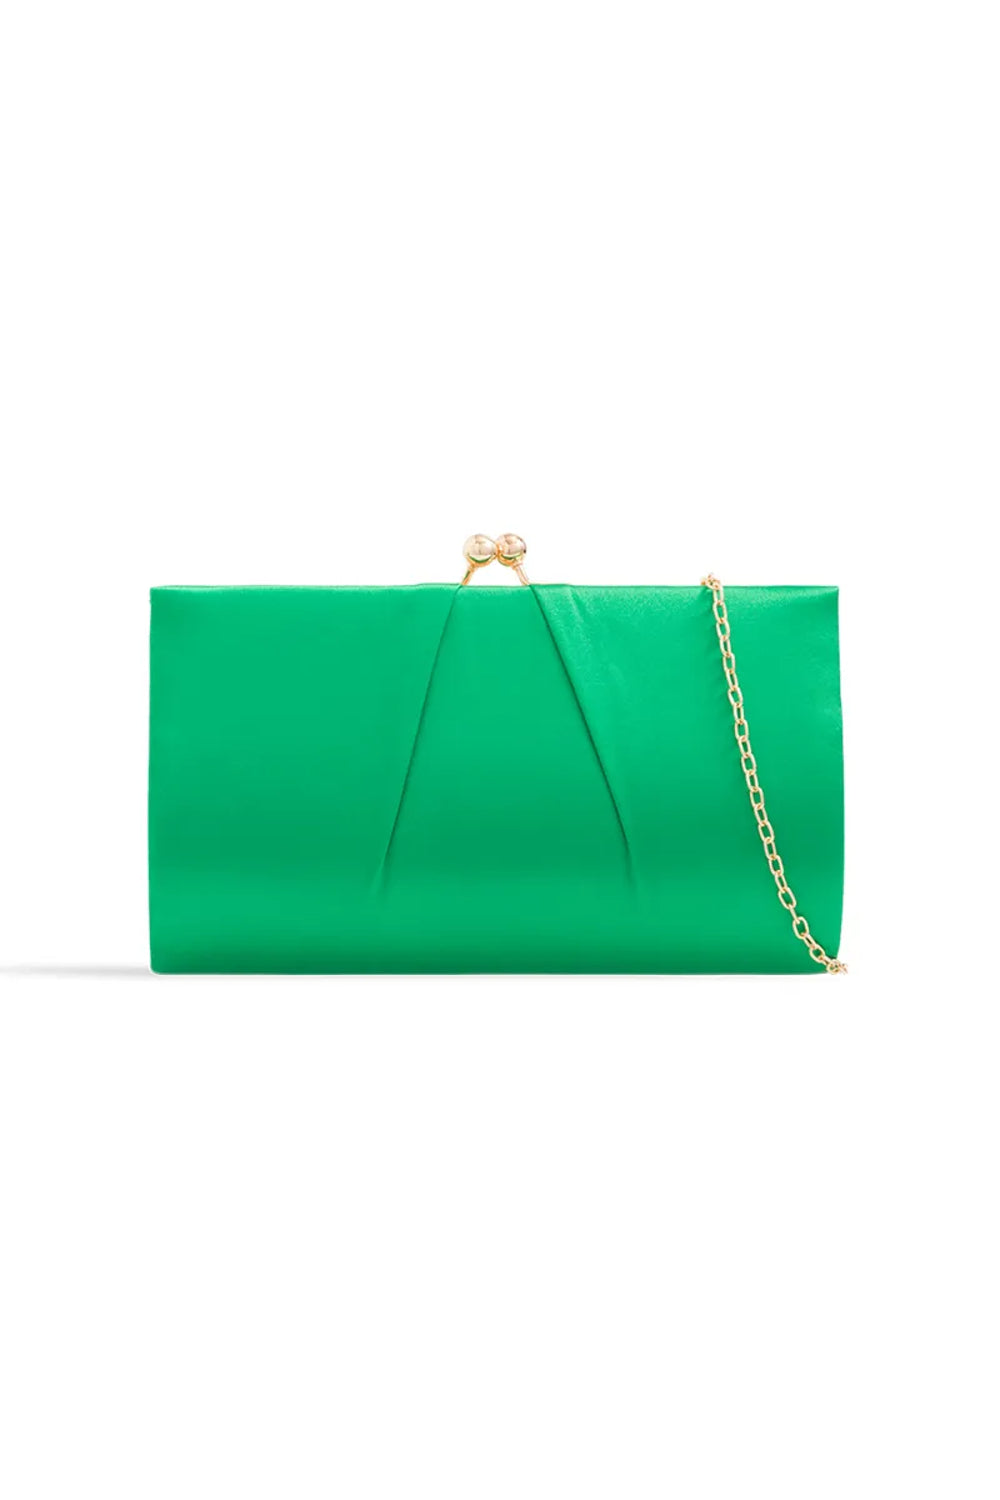 Green Satin Clutch Bag